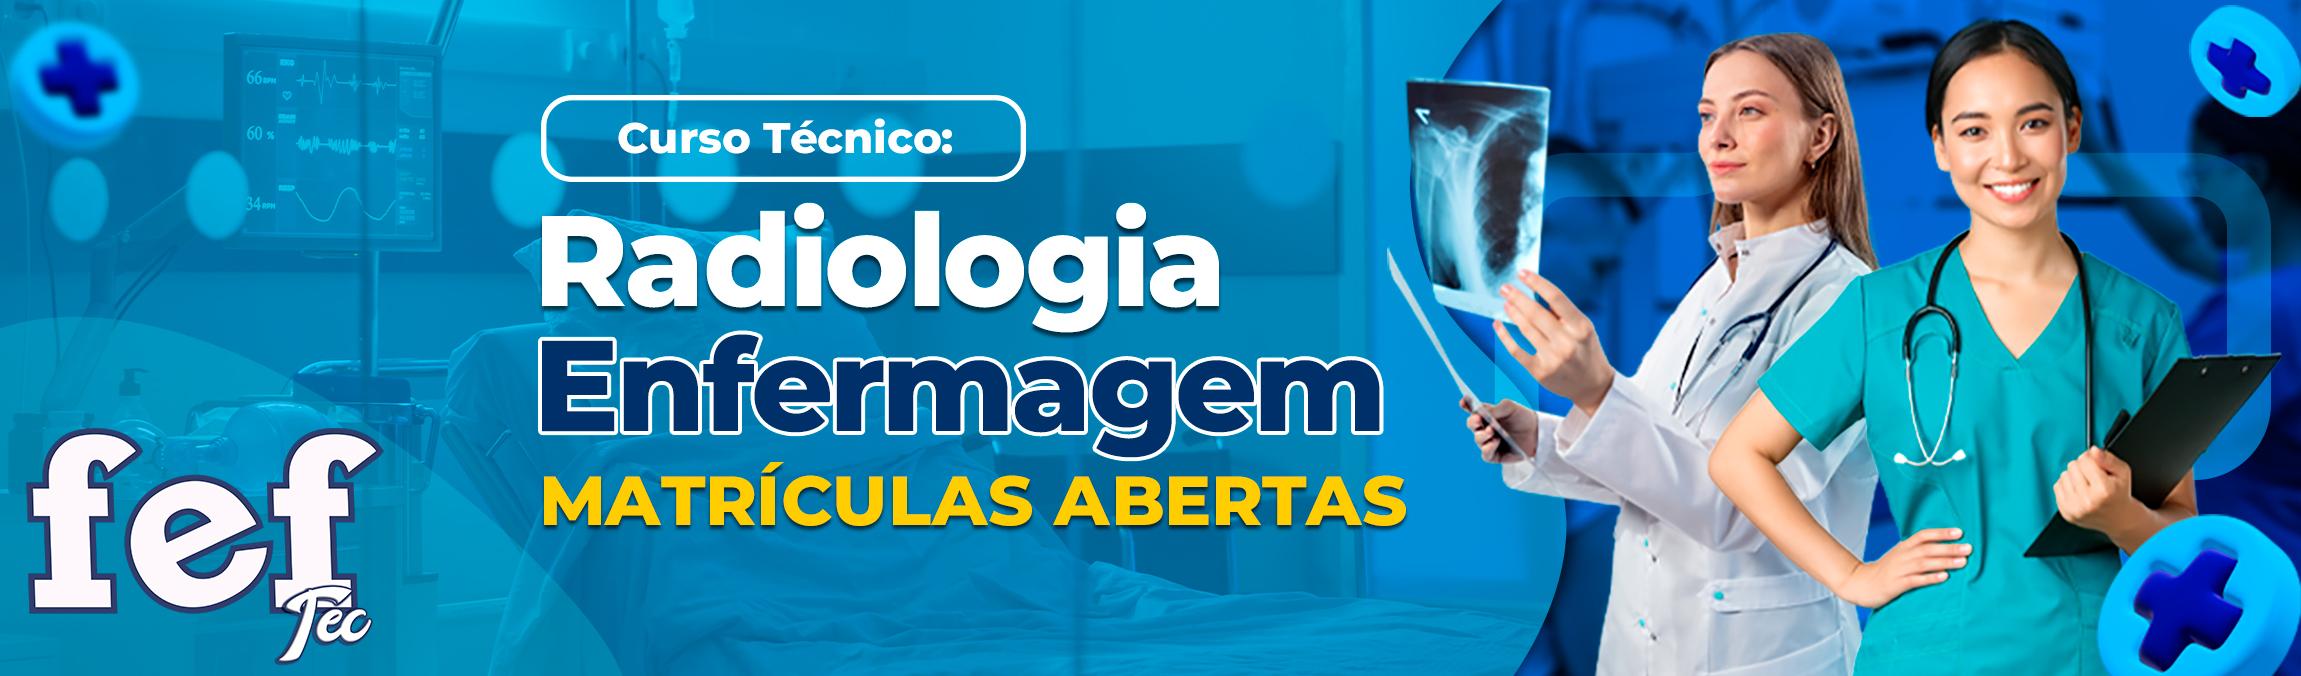 Banner Faculdades Integradas de Fernandópolis - Curso Técnico